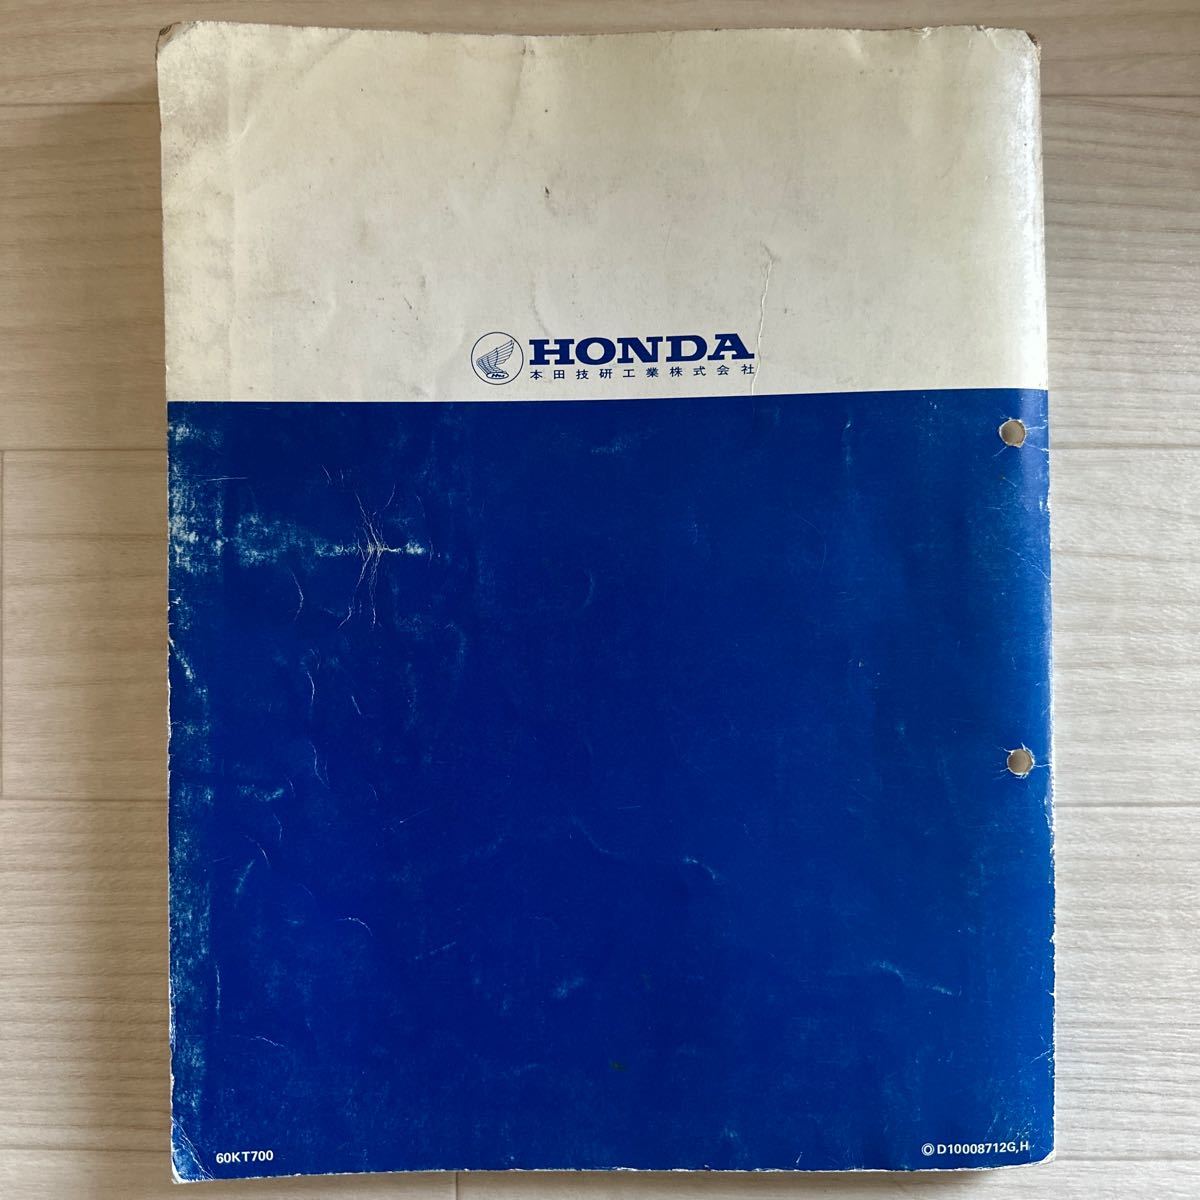 [A0105-56] Showa era 62 year Honda (CBR250FOUR/CBR250R service manual )/ parts list / parts catalog / instructions / repair book / wiring diagram 